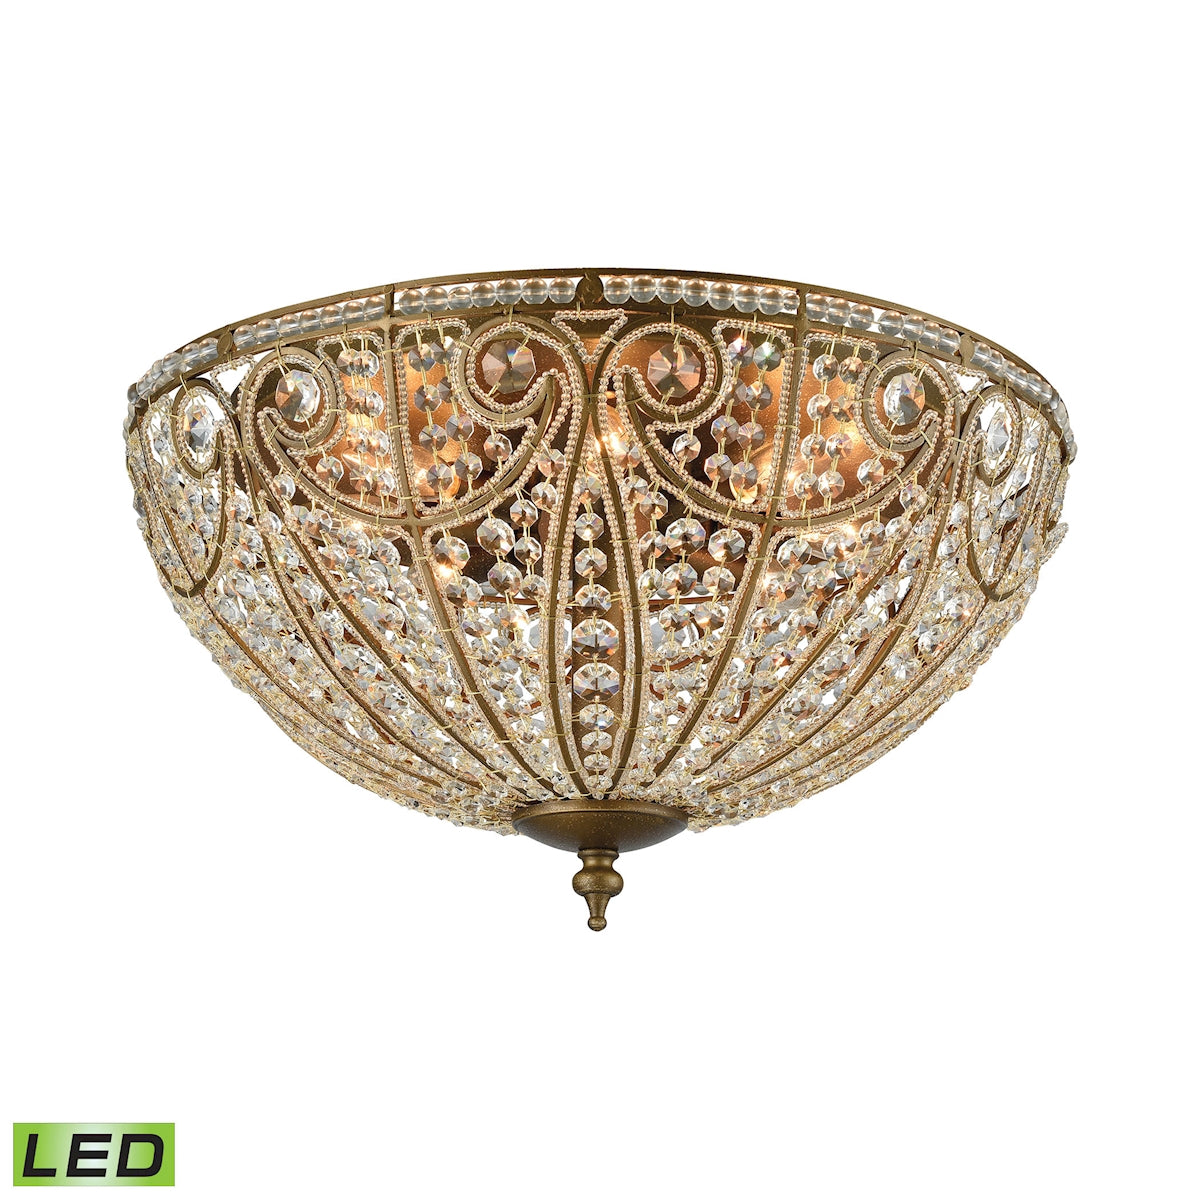 ELK Lighting 15963/8-LED Elizabethan 8-Light Flush Mount in Dark Bronze with Clear Crystal - Includes LED Bulbs